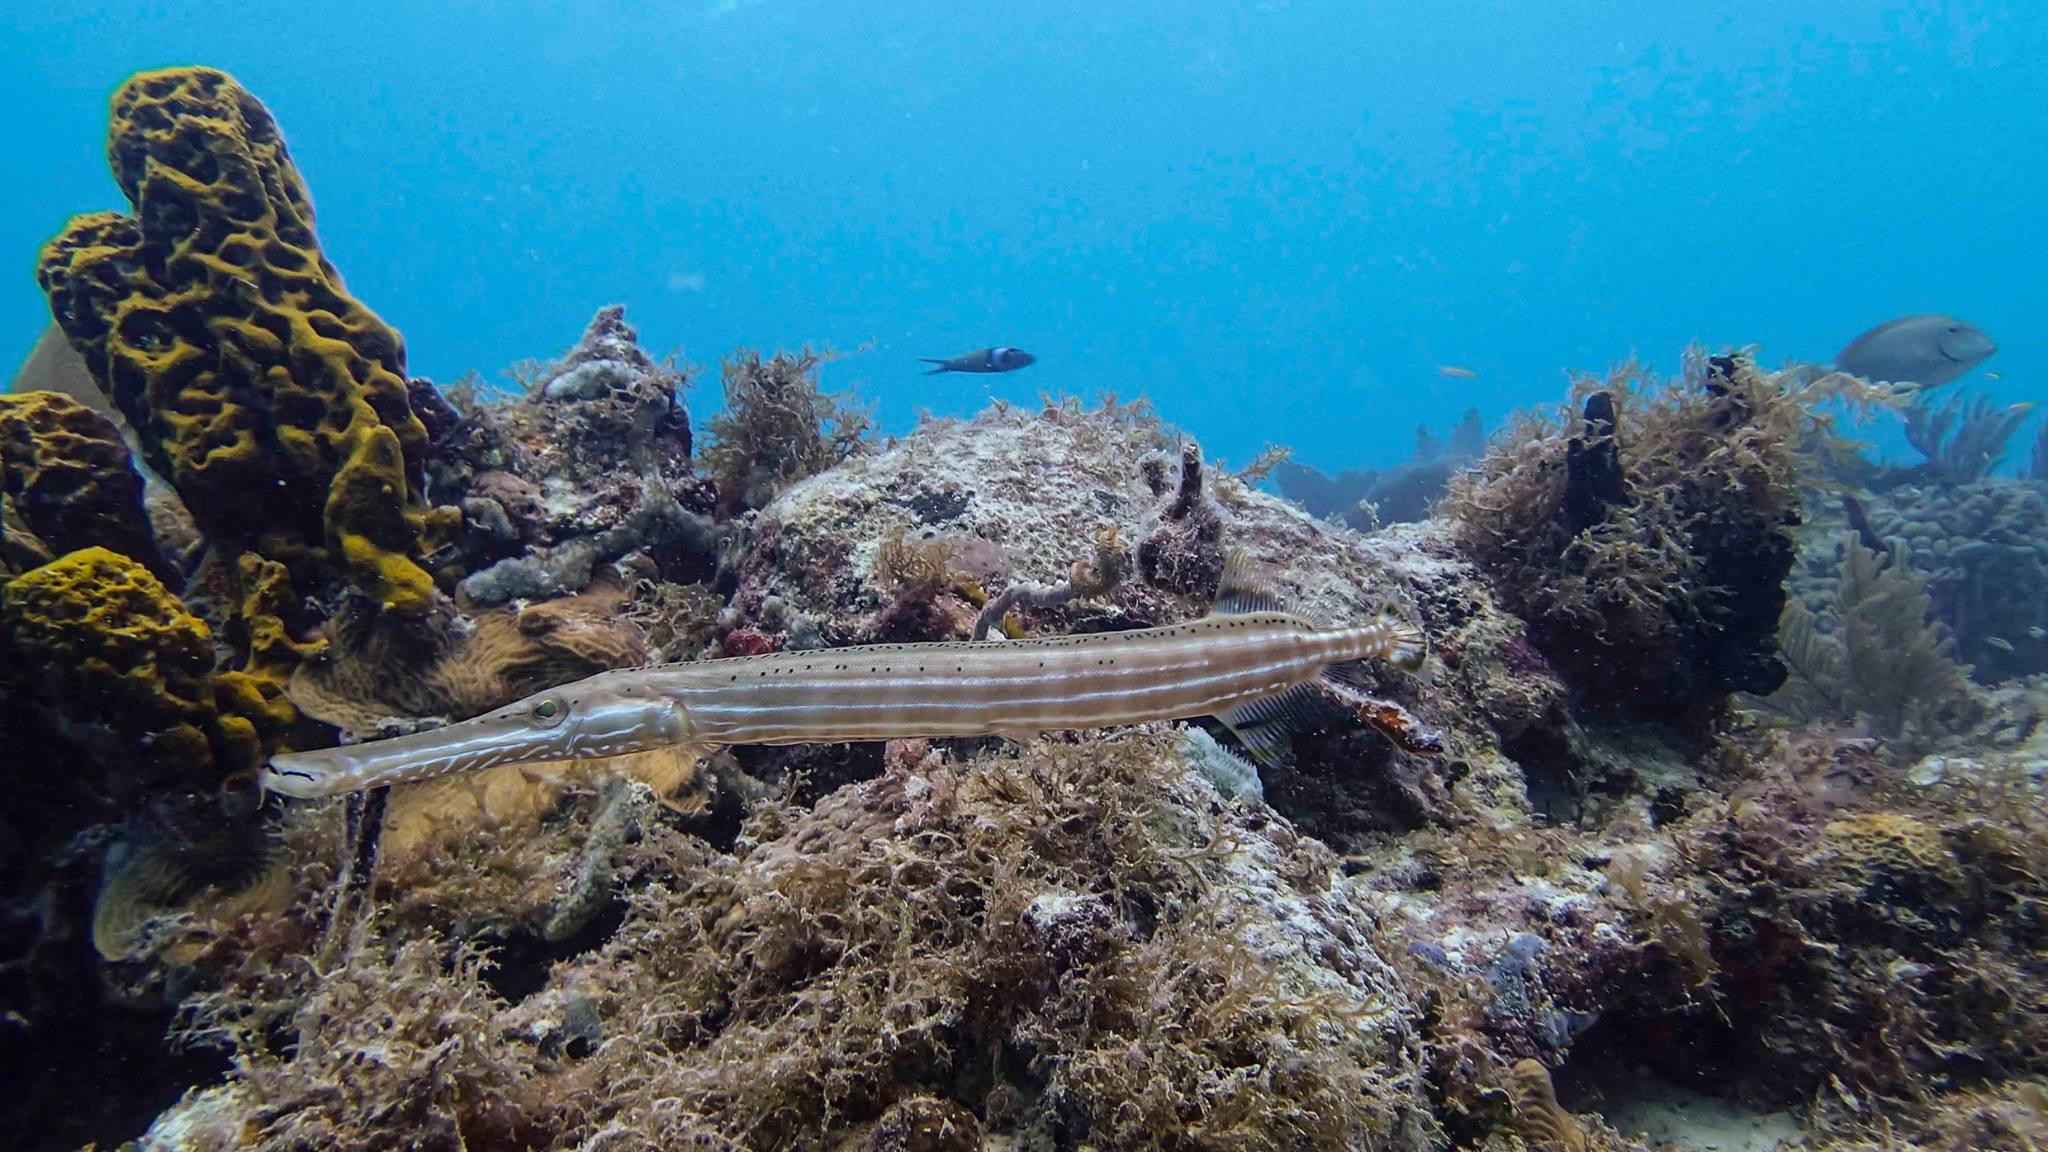 Trumpet fish on reef